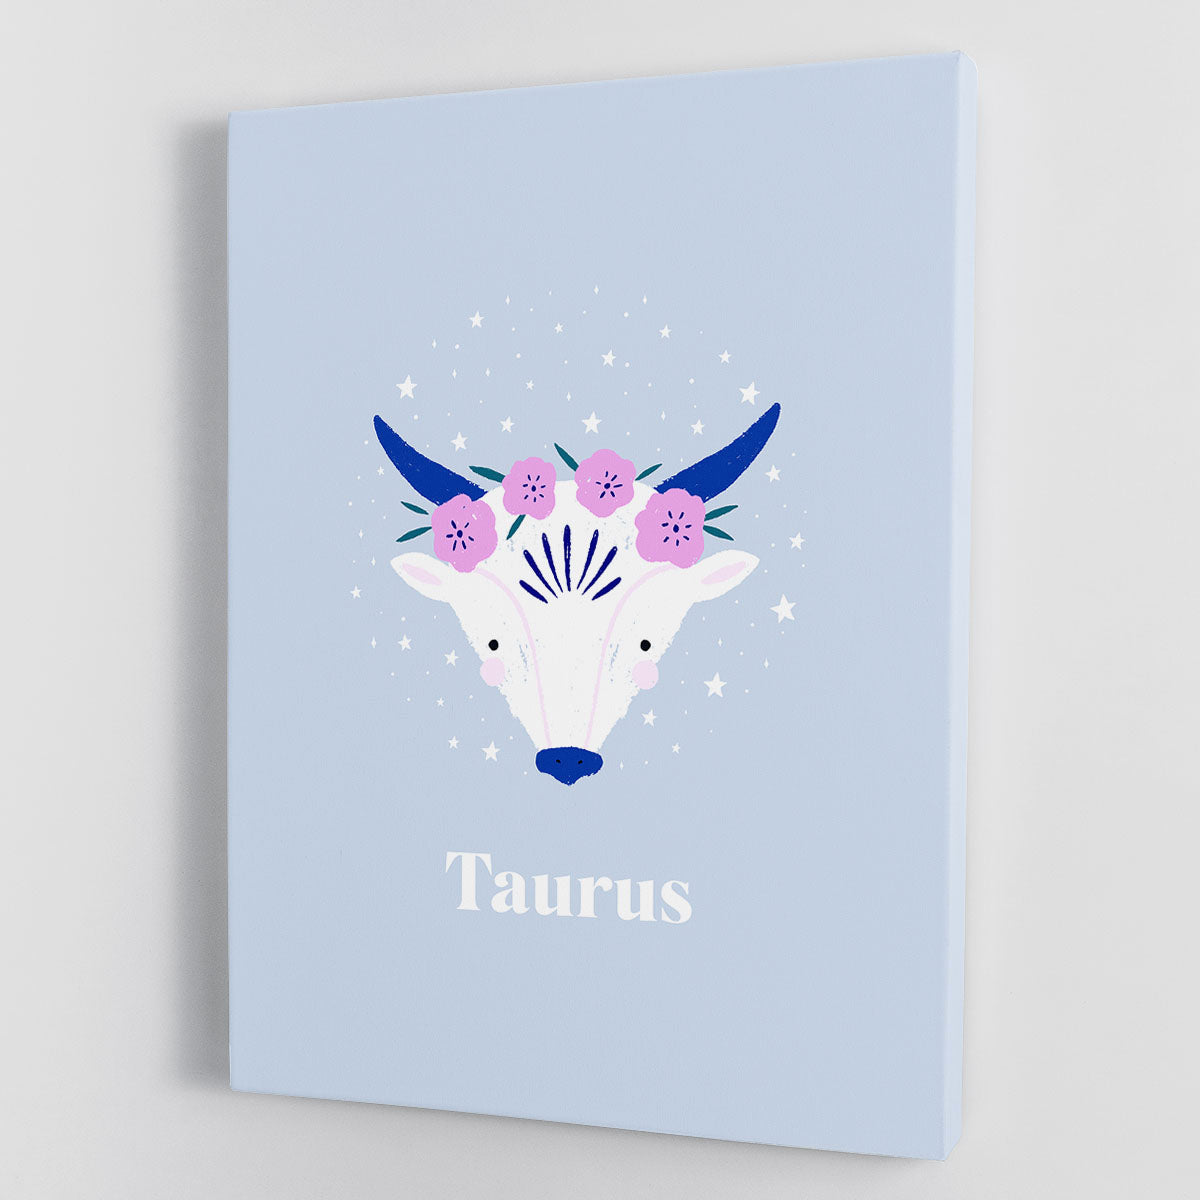 Taurus Inspiration Poster Canvas Print or Poster - Canvas Art Rocks - 1